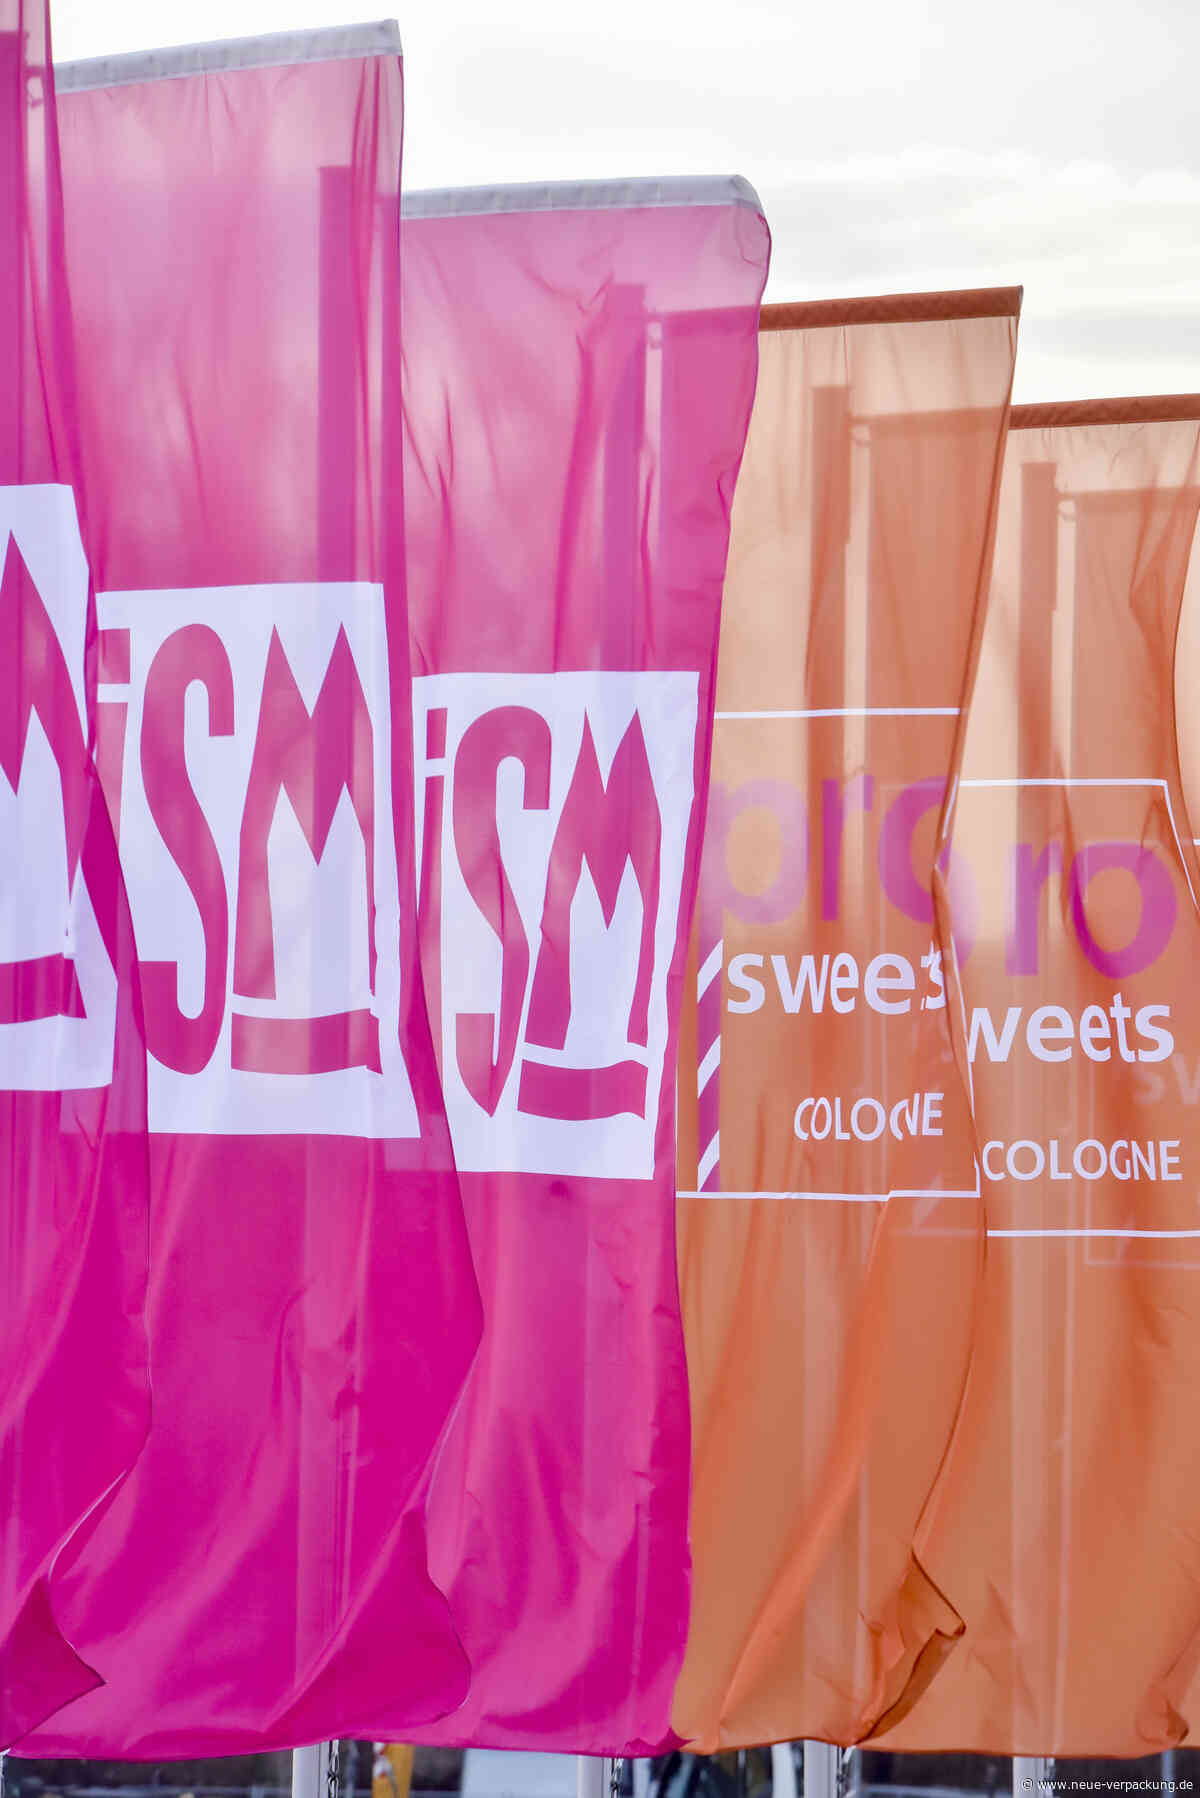 Pro Sweets Cologne blickt positiv auf Veranstaltung 2022 - - neue-verpackung.de